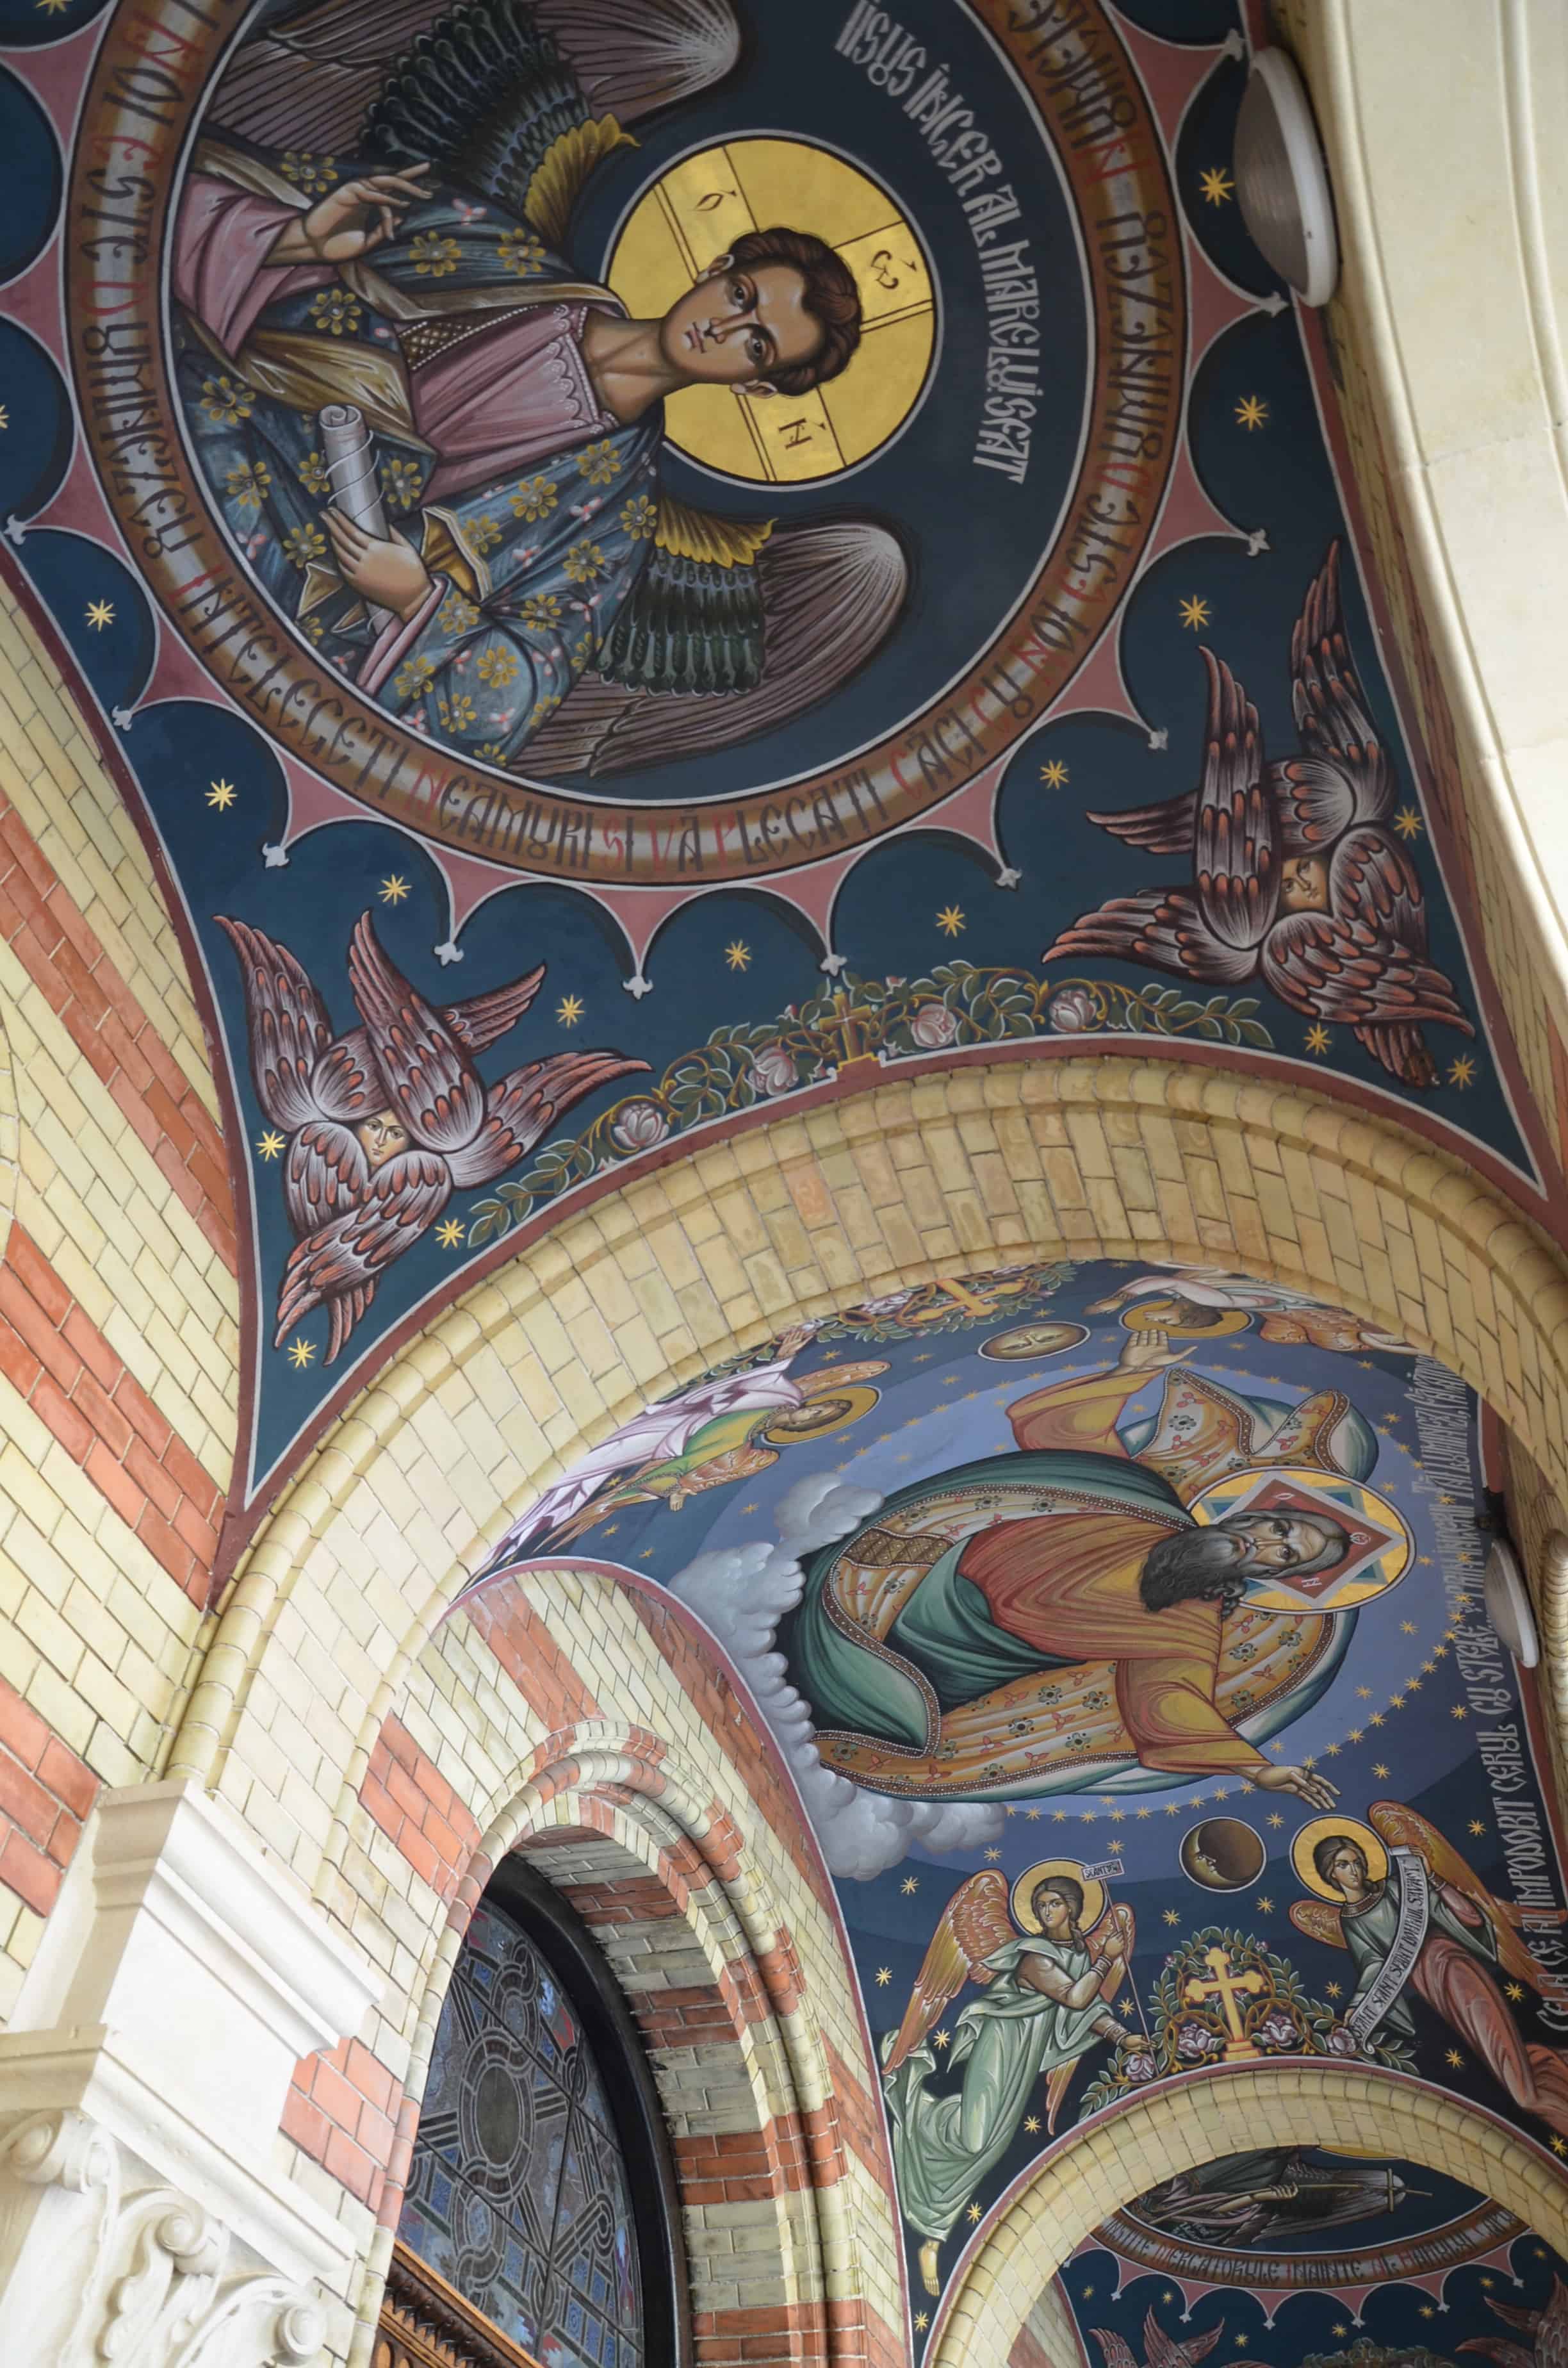 Holy Trinity Orthodox Metropolitan Cathedral in Sibiu, Romania